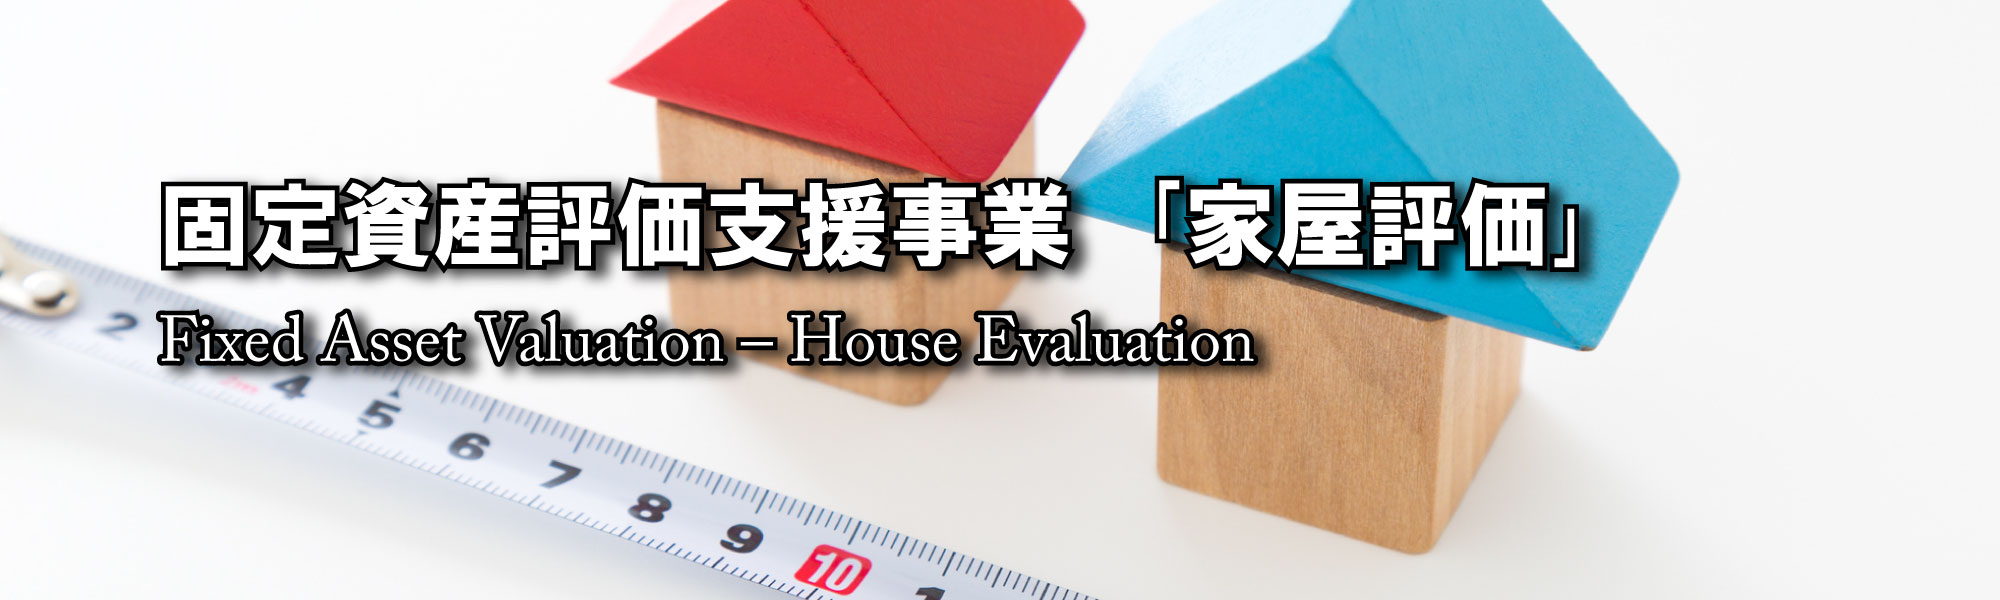 固定資産評価支援事業「家屋評価」 Fixed Asset Valuation - House Evaluation